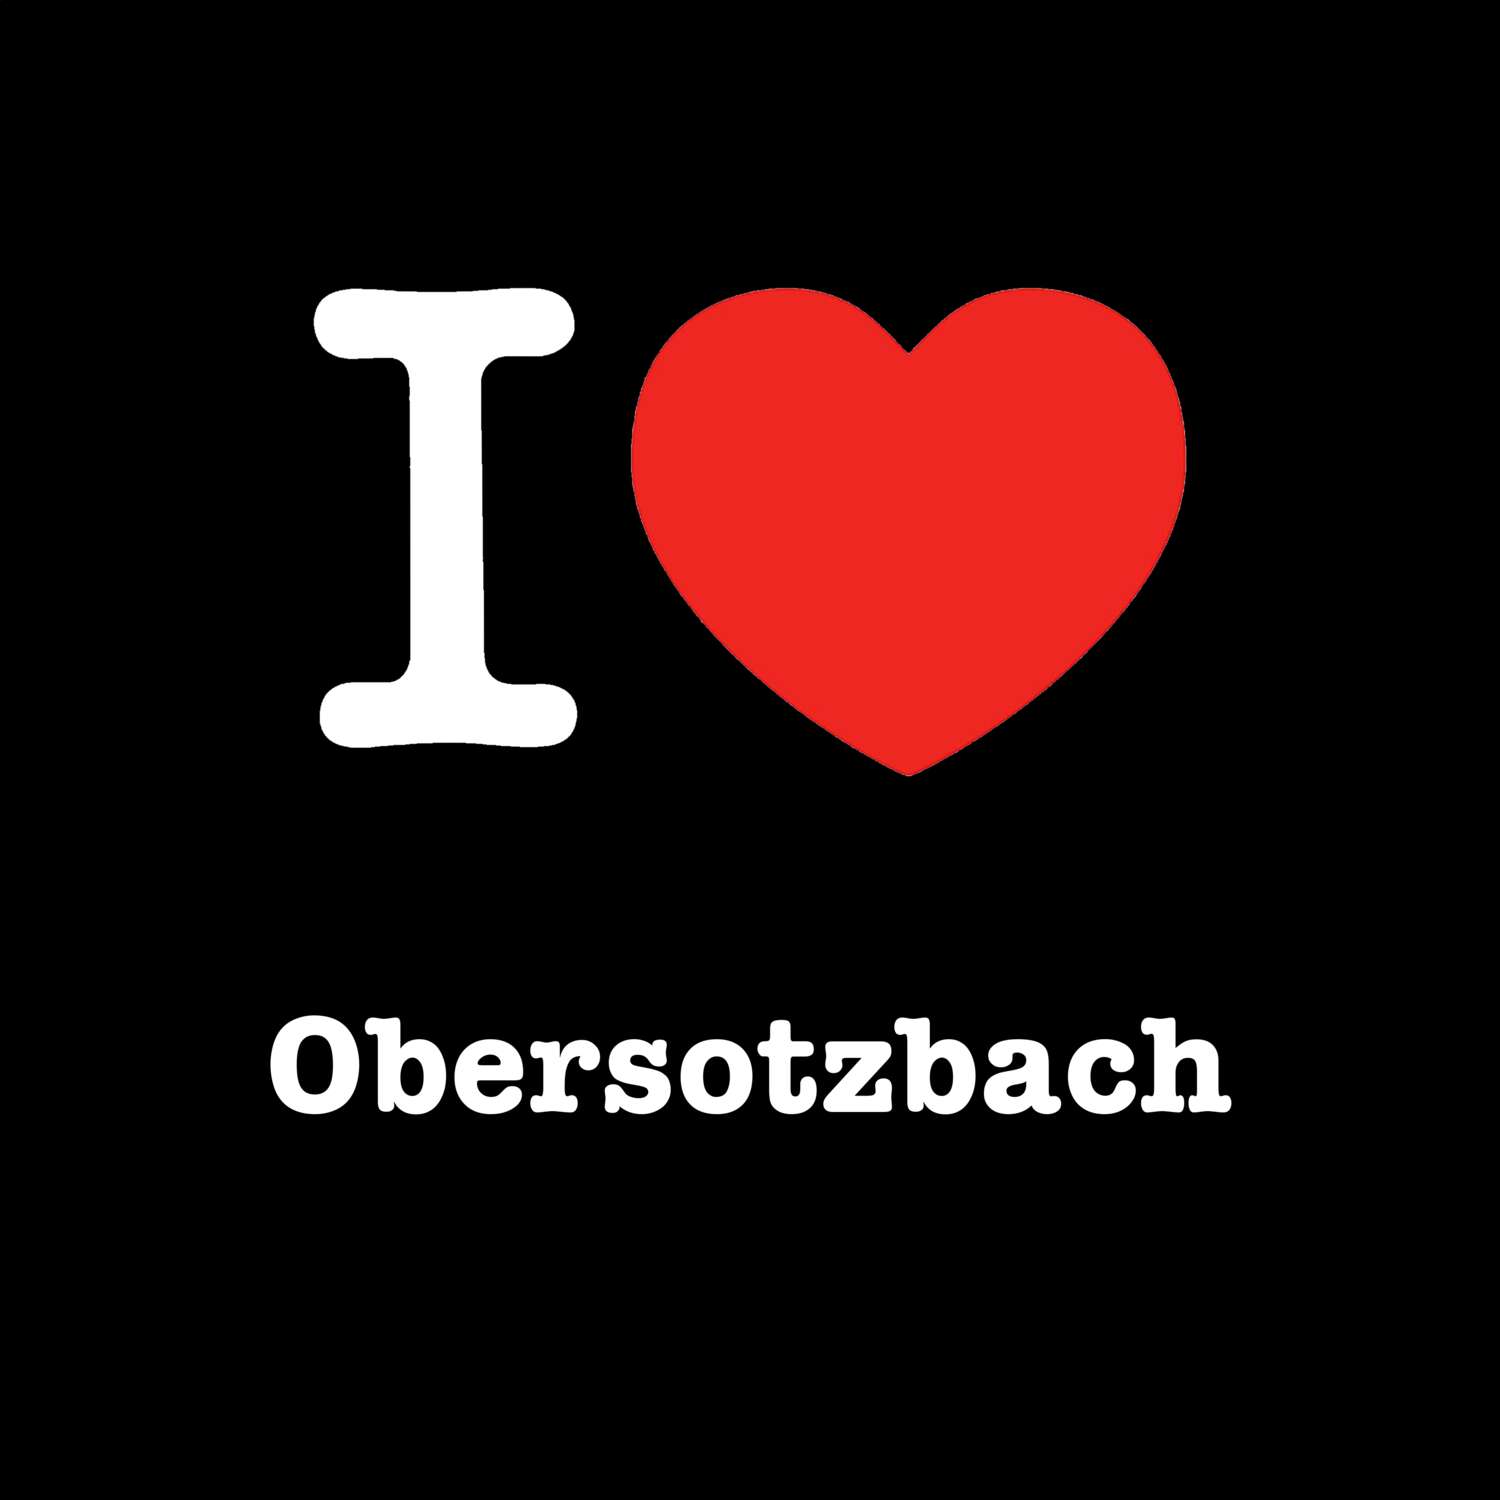 Obersotzbach T-Shirt »I love«